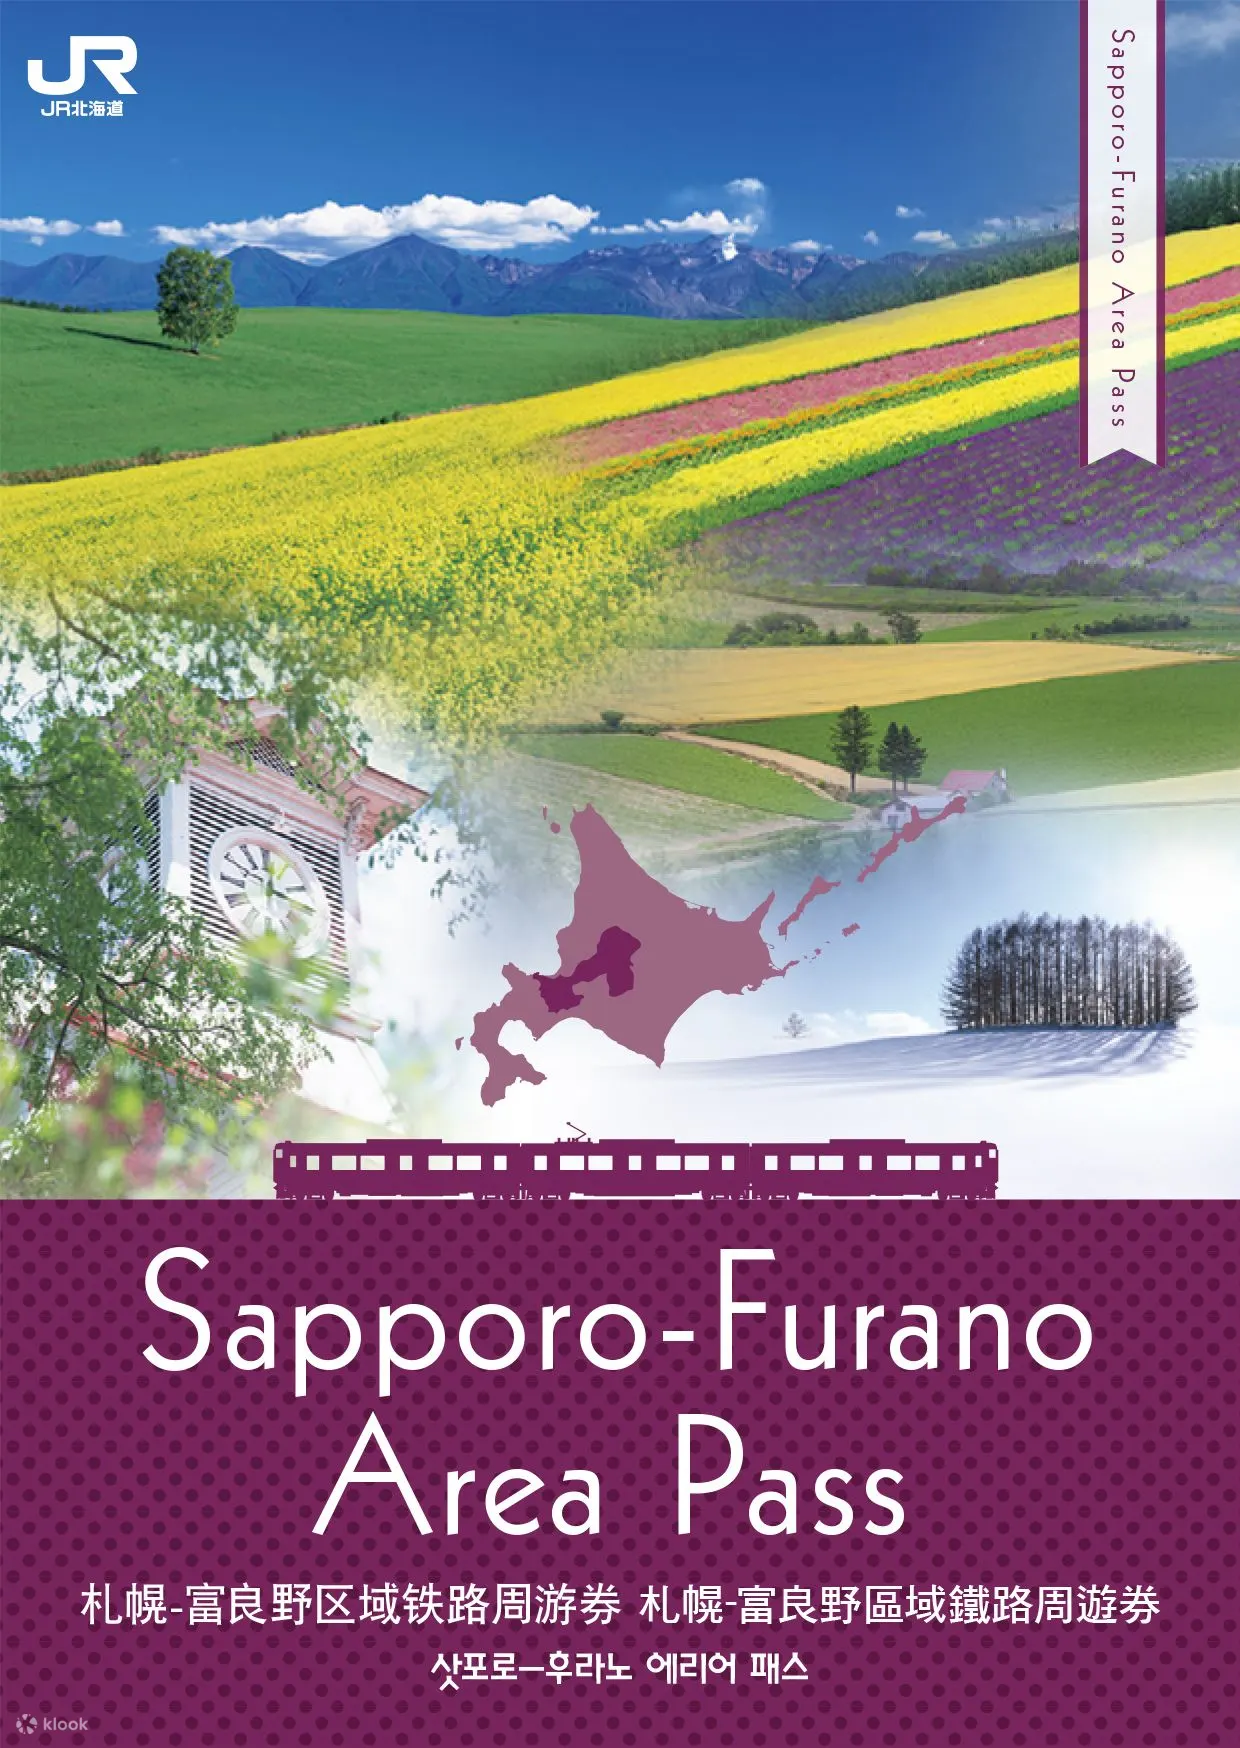 JR Hokkaido Sapporo-Furano Area Pass - Pass Benefits and Coverage